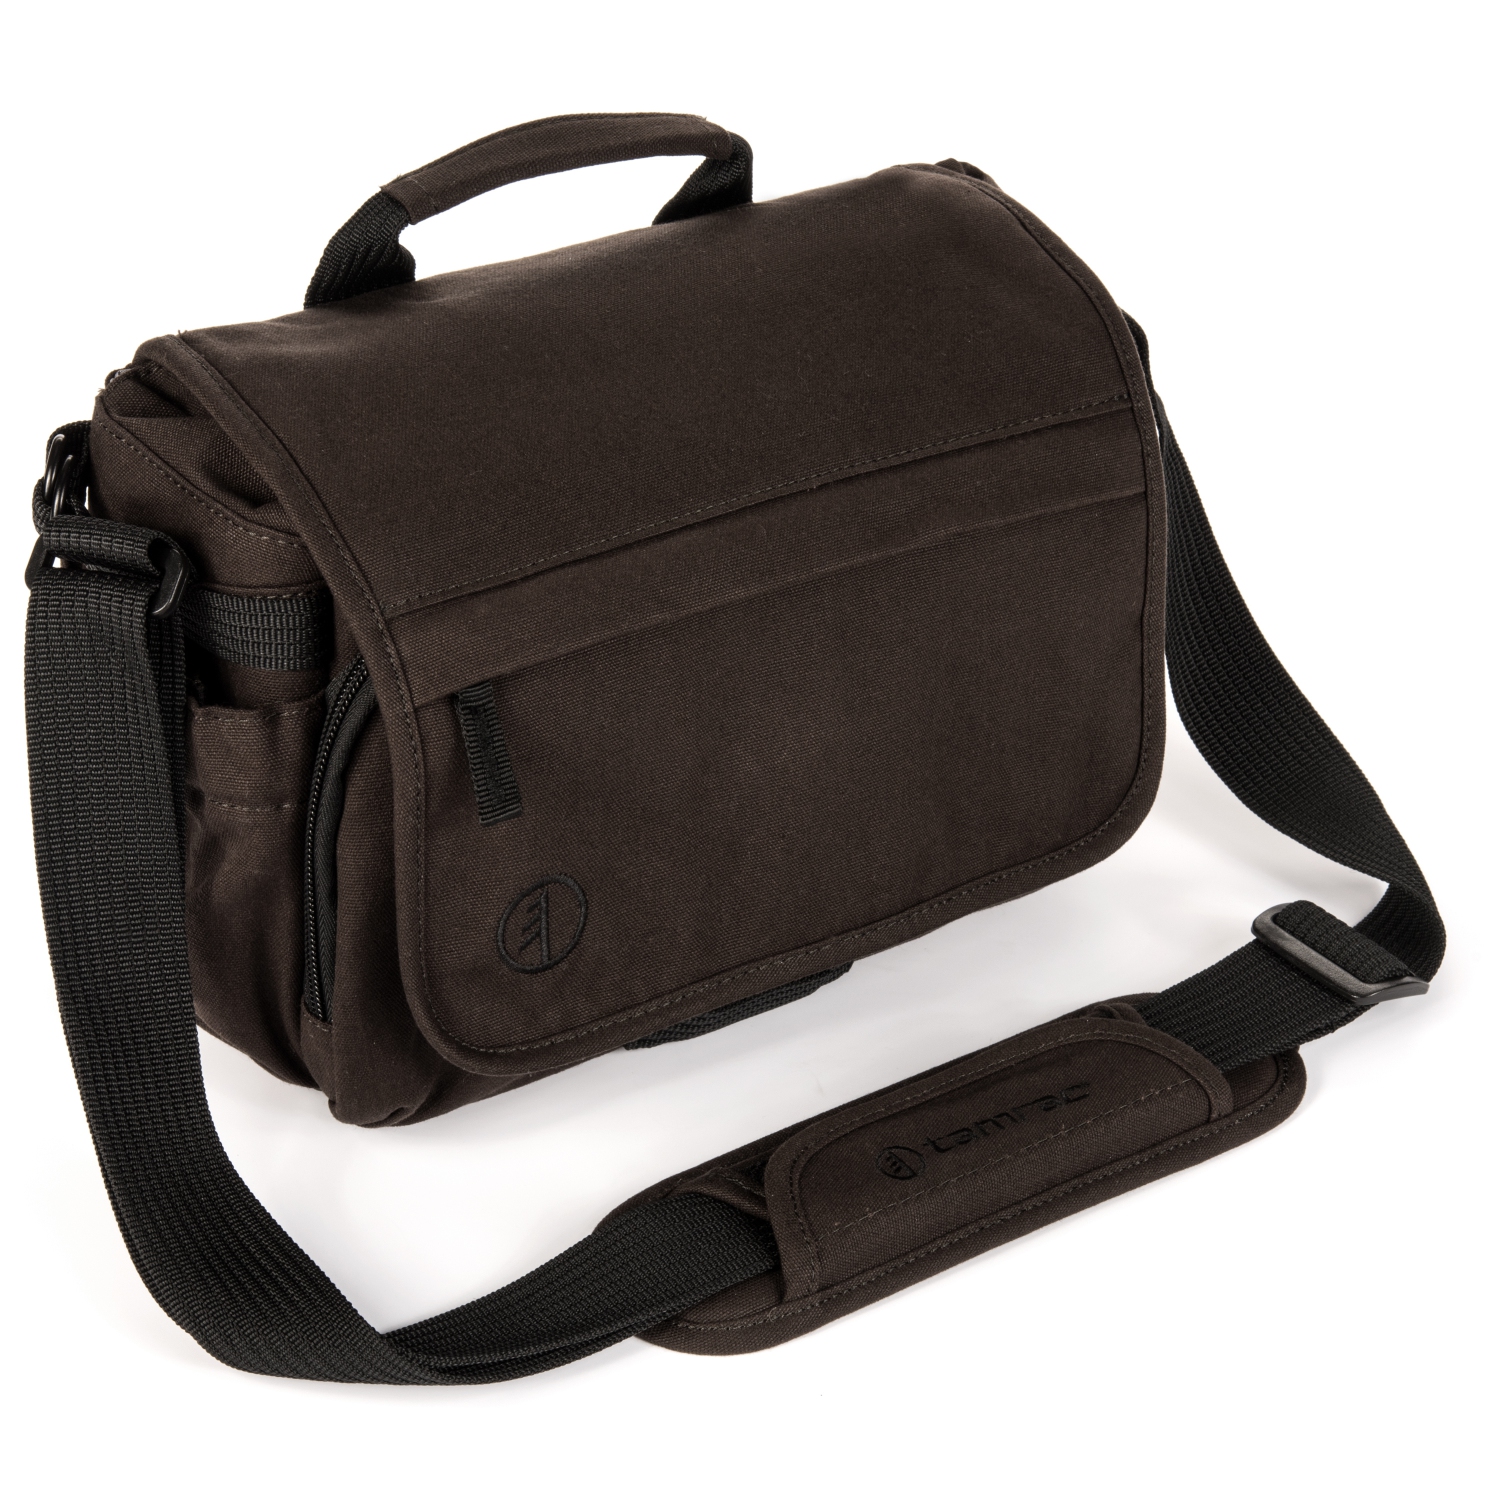 Tamrac Apache 4.2 Shoulder Bag for DSLR and Mirrorless Cameras, Small Camera Bag